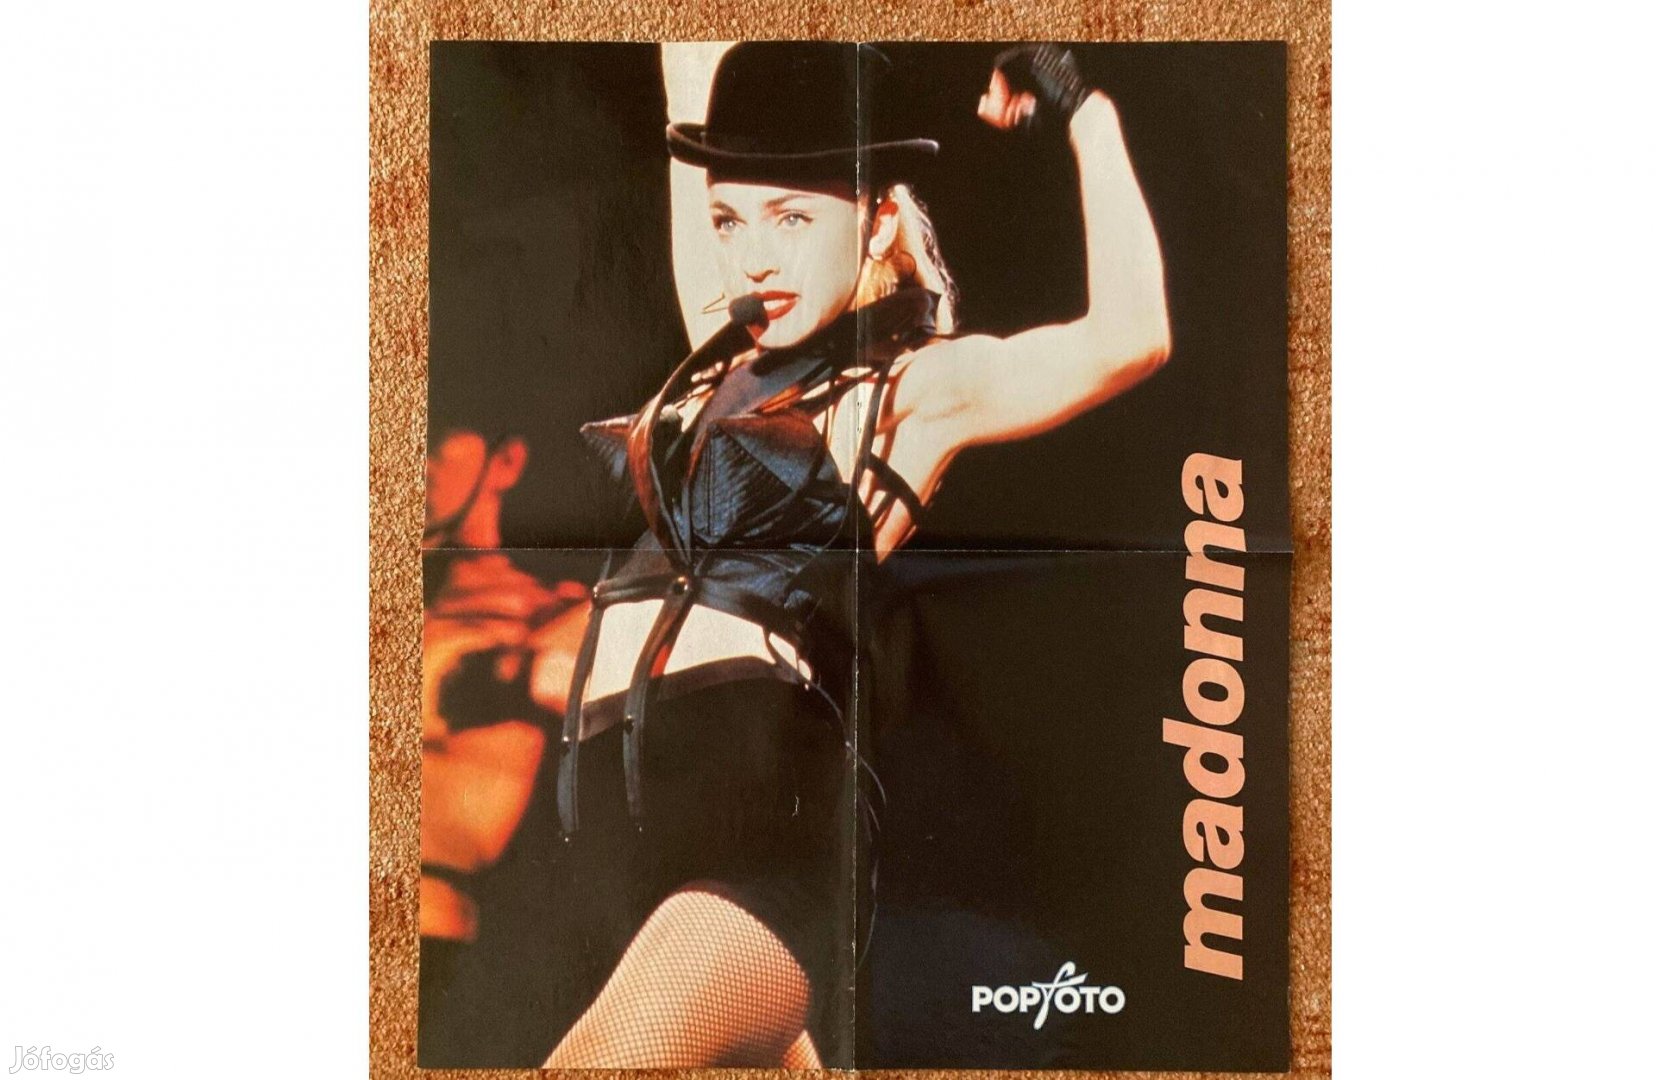 Retró poszter! Madonna / Andre Agassi - 4 oldalas nagyposzer